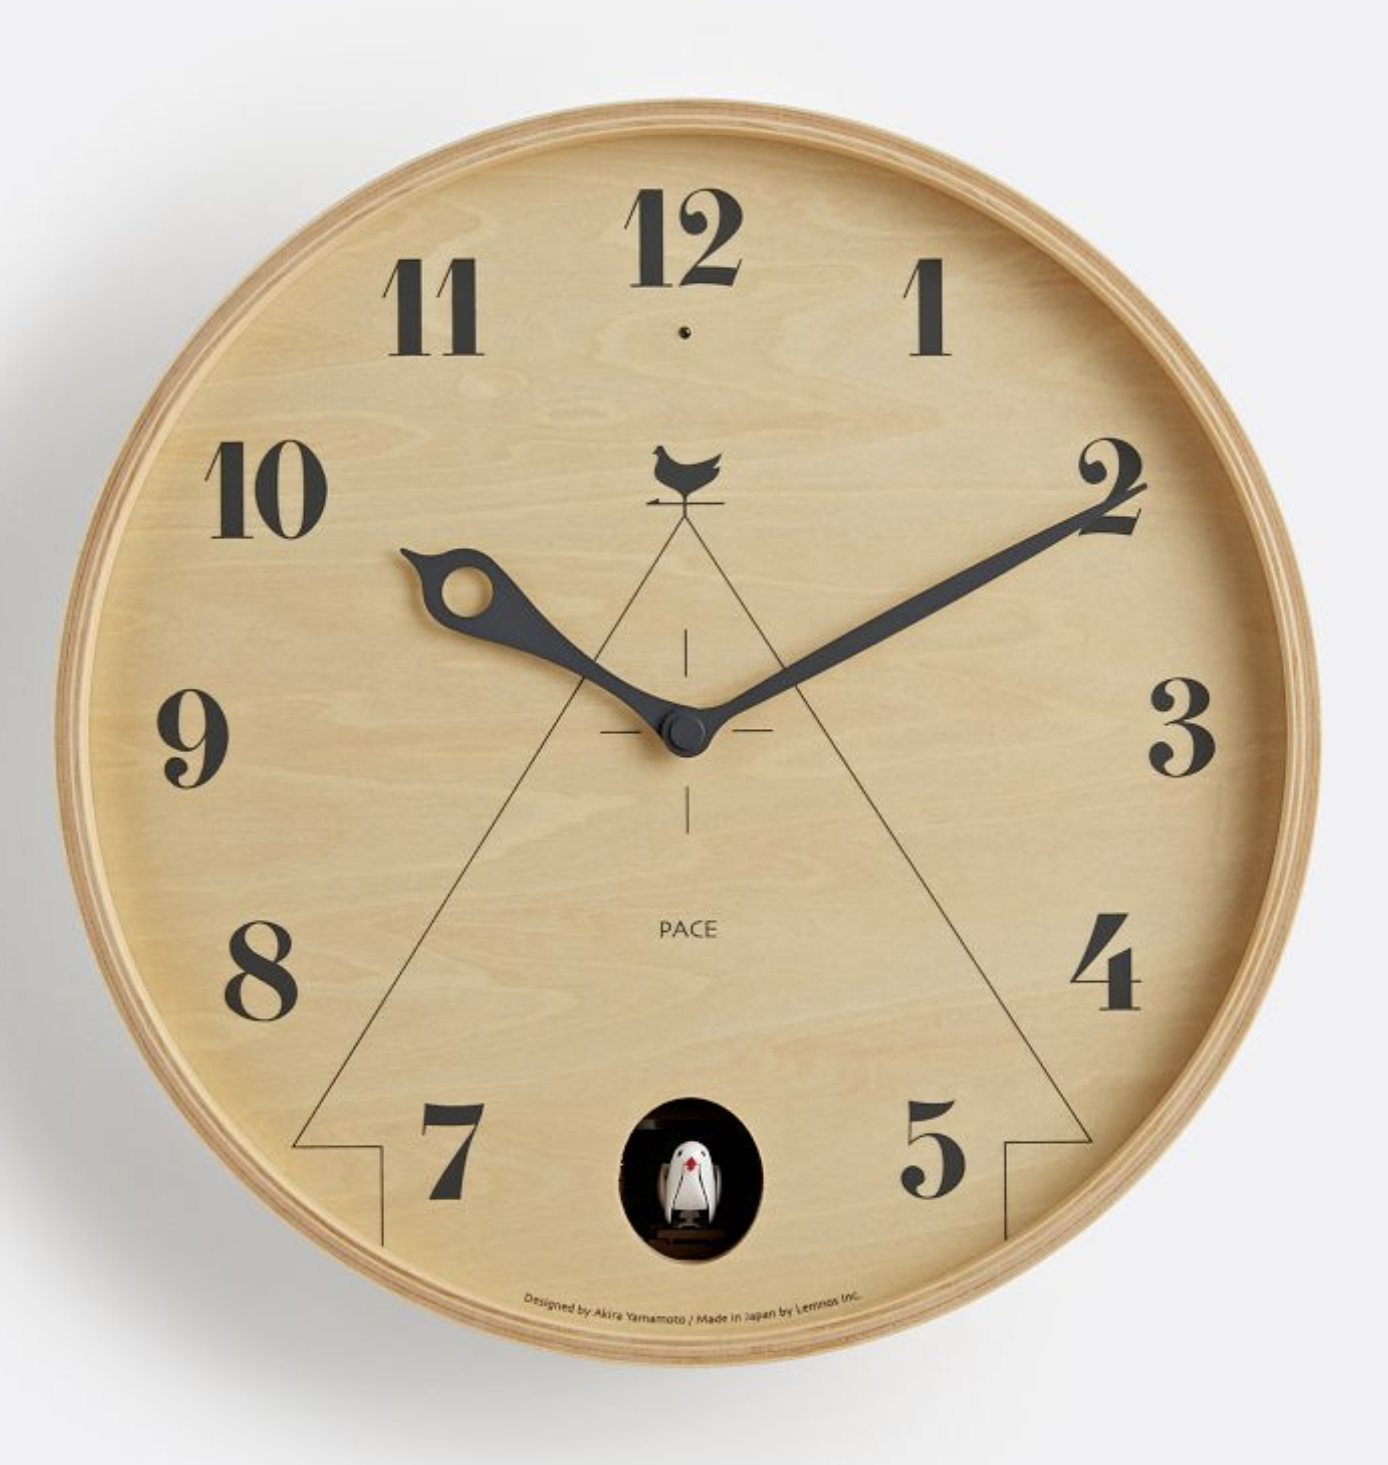 Pace Cuckoo Clock